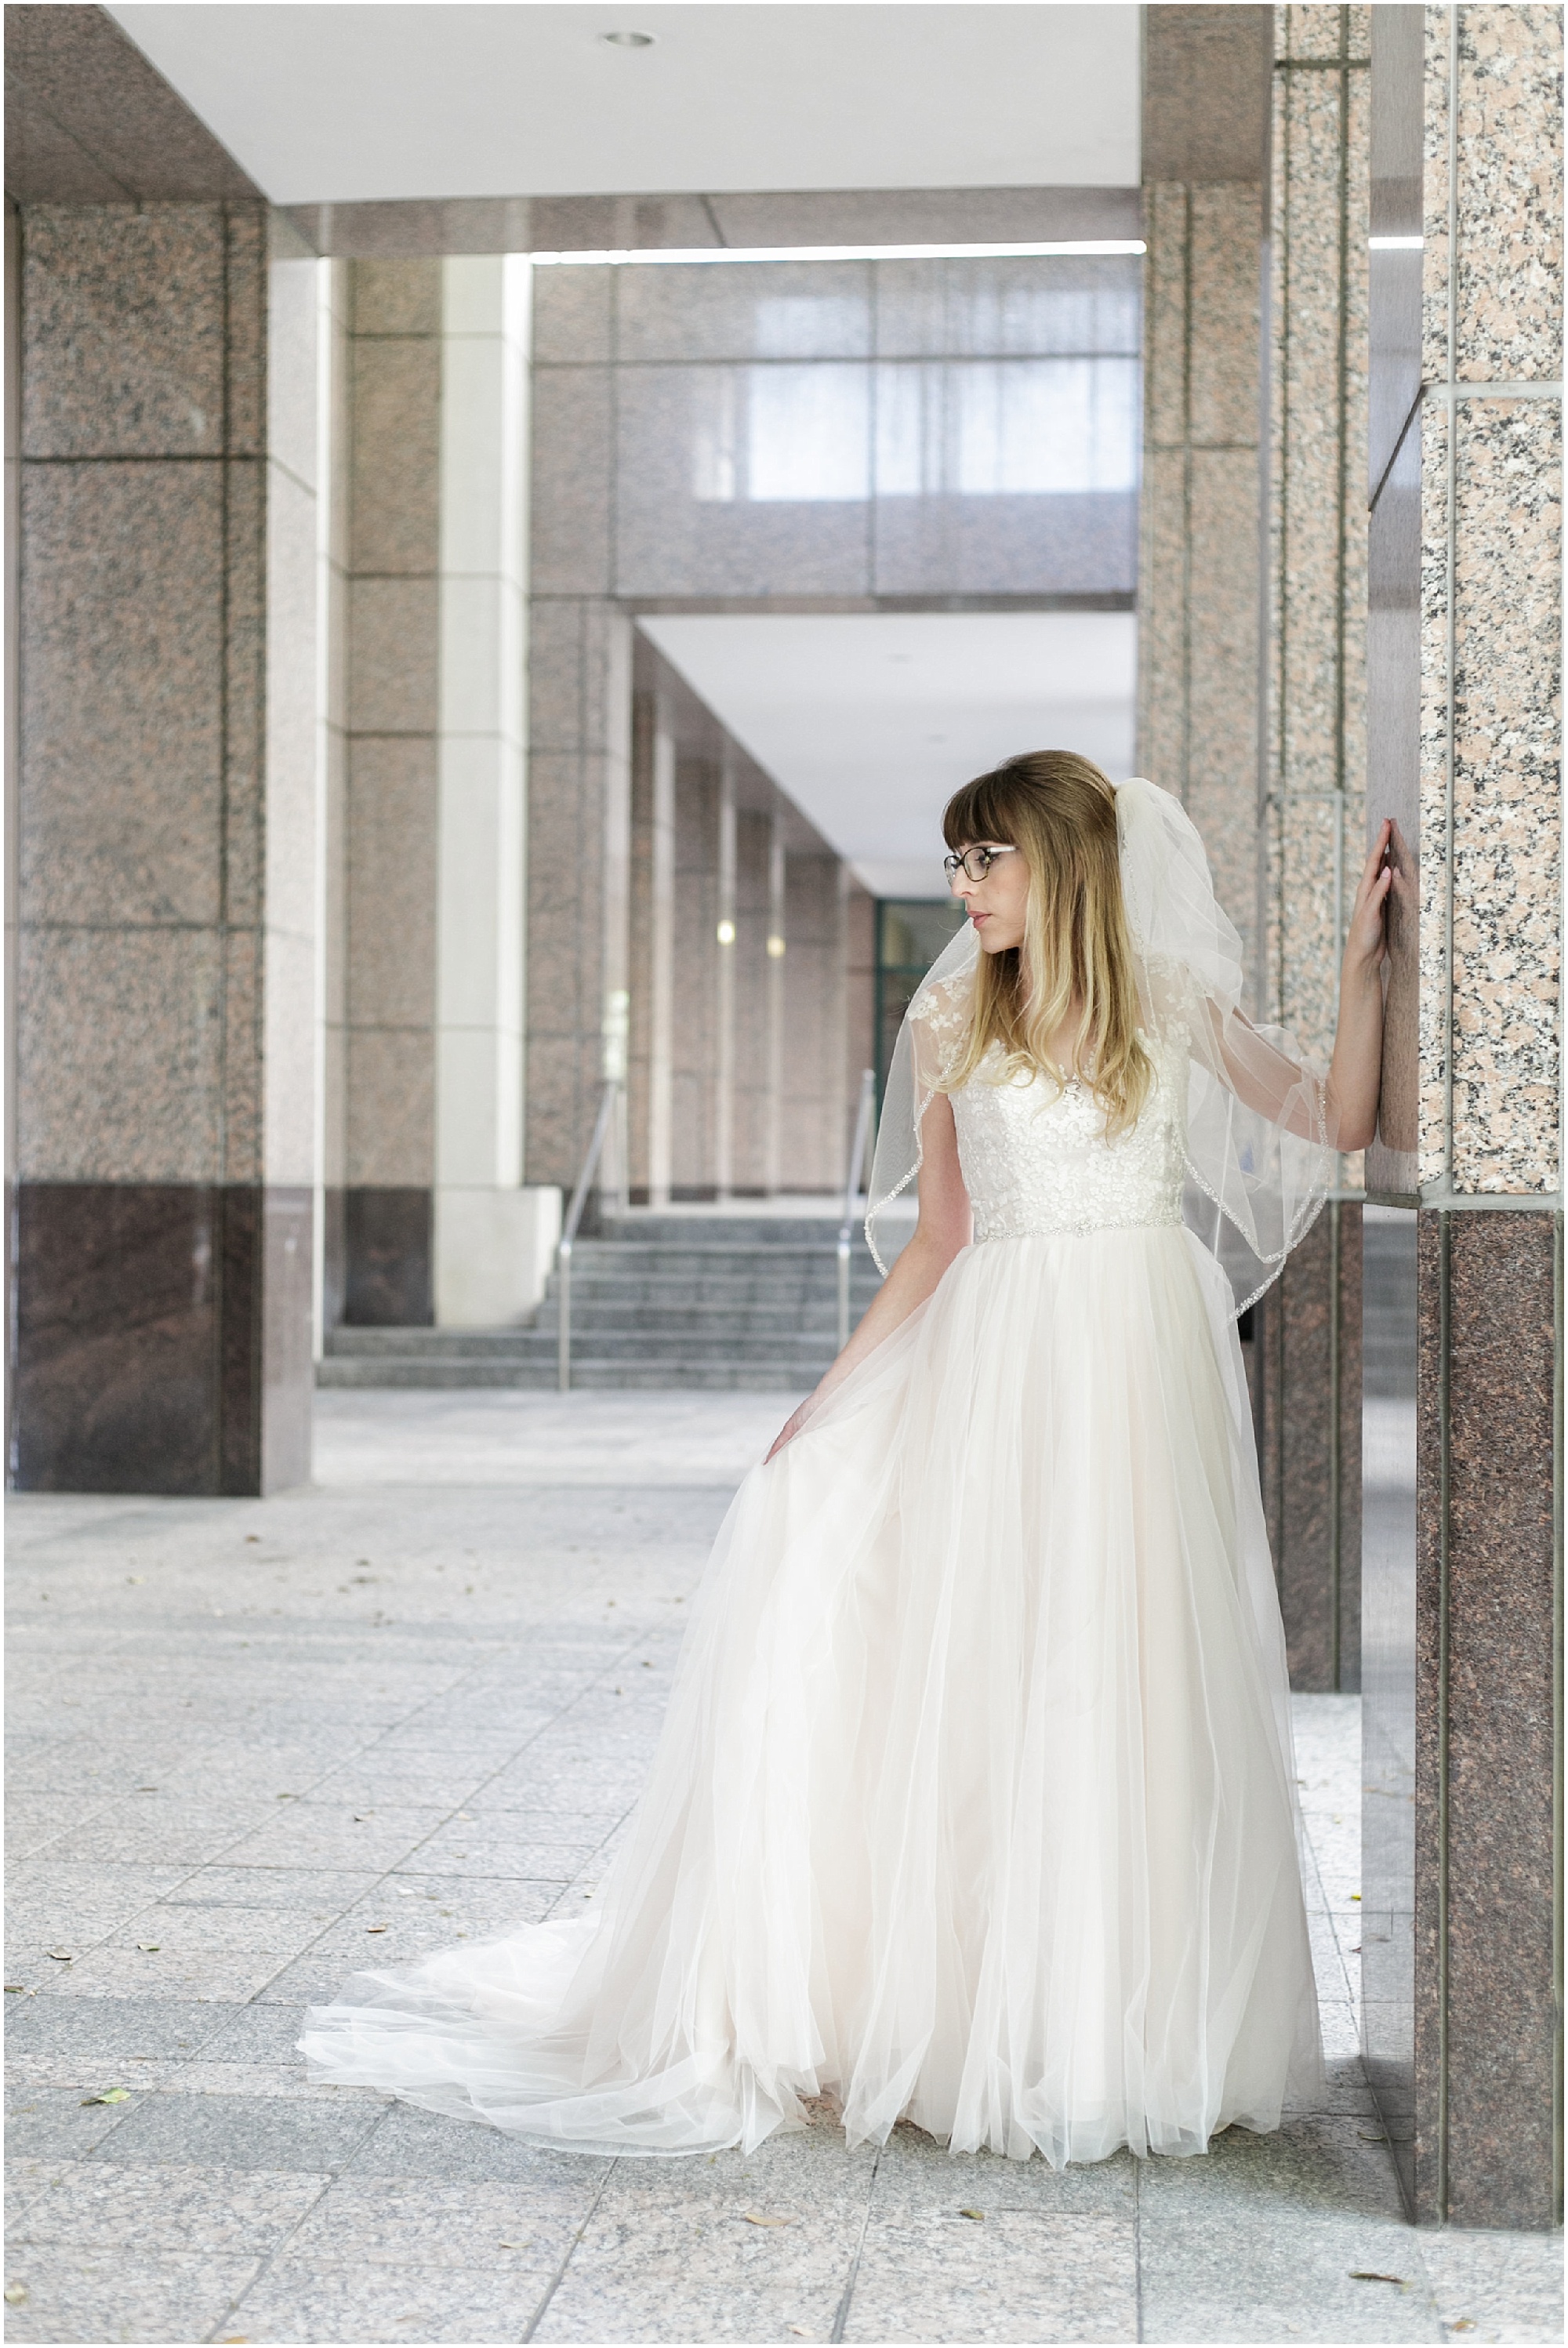 Bride posing in a breezeway in her wedding dress.